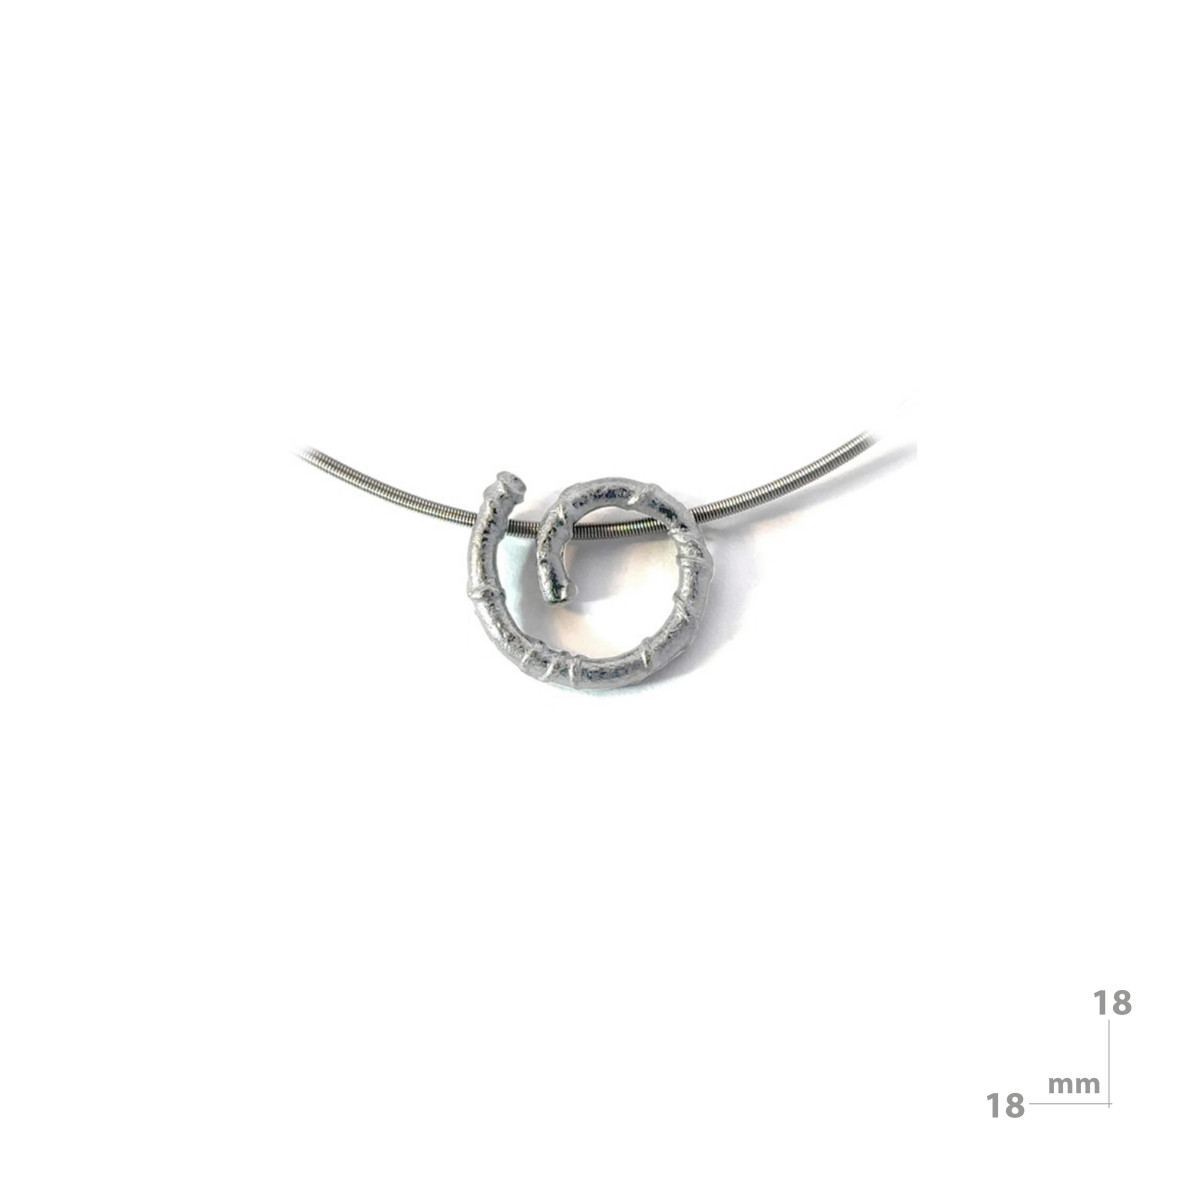 silver pendant